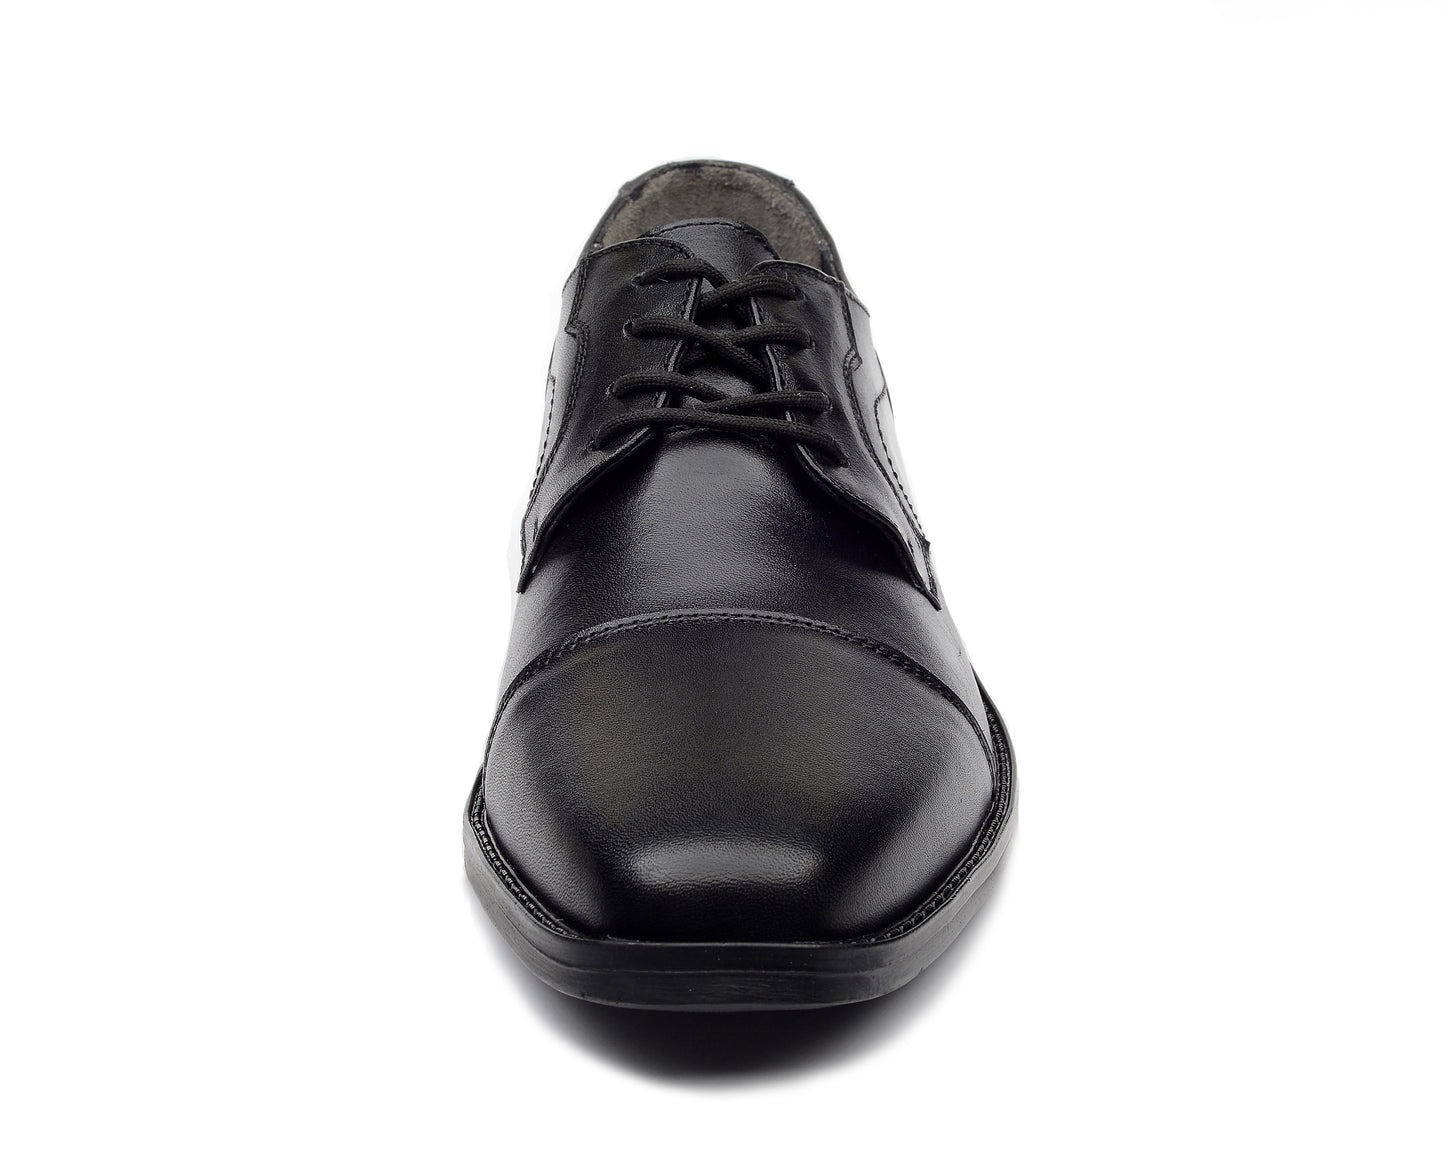 EMYCO-Zapato para hombre de vestir tipo Blucher de piel Mod Mileni 117002 -Color Negro